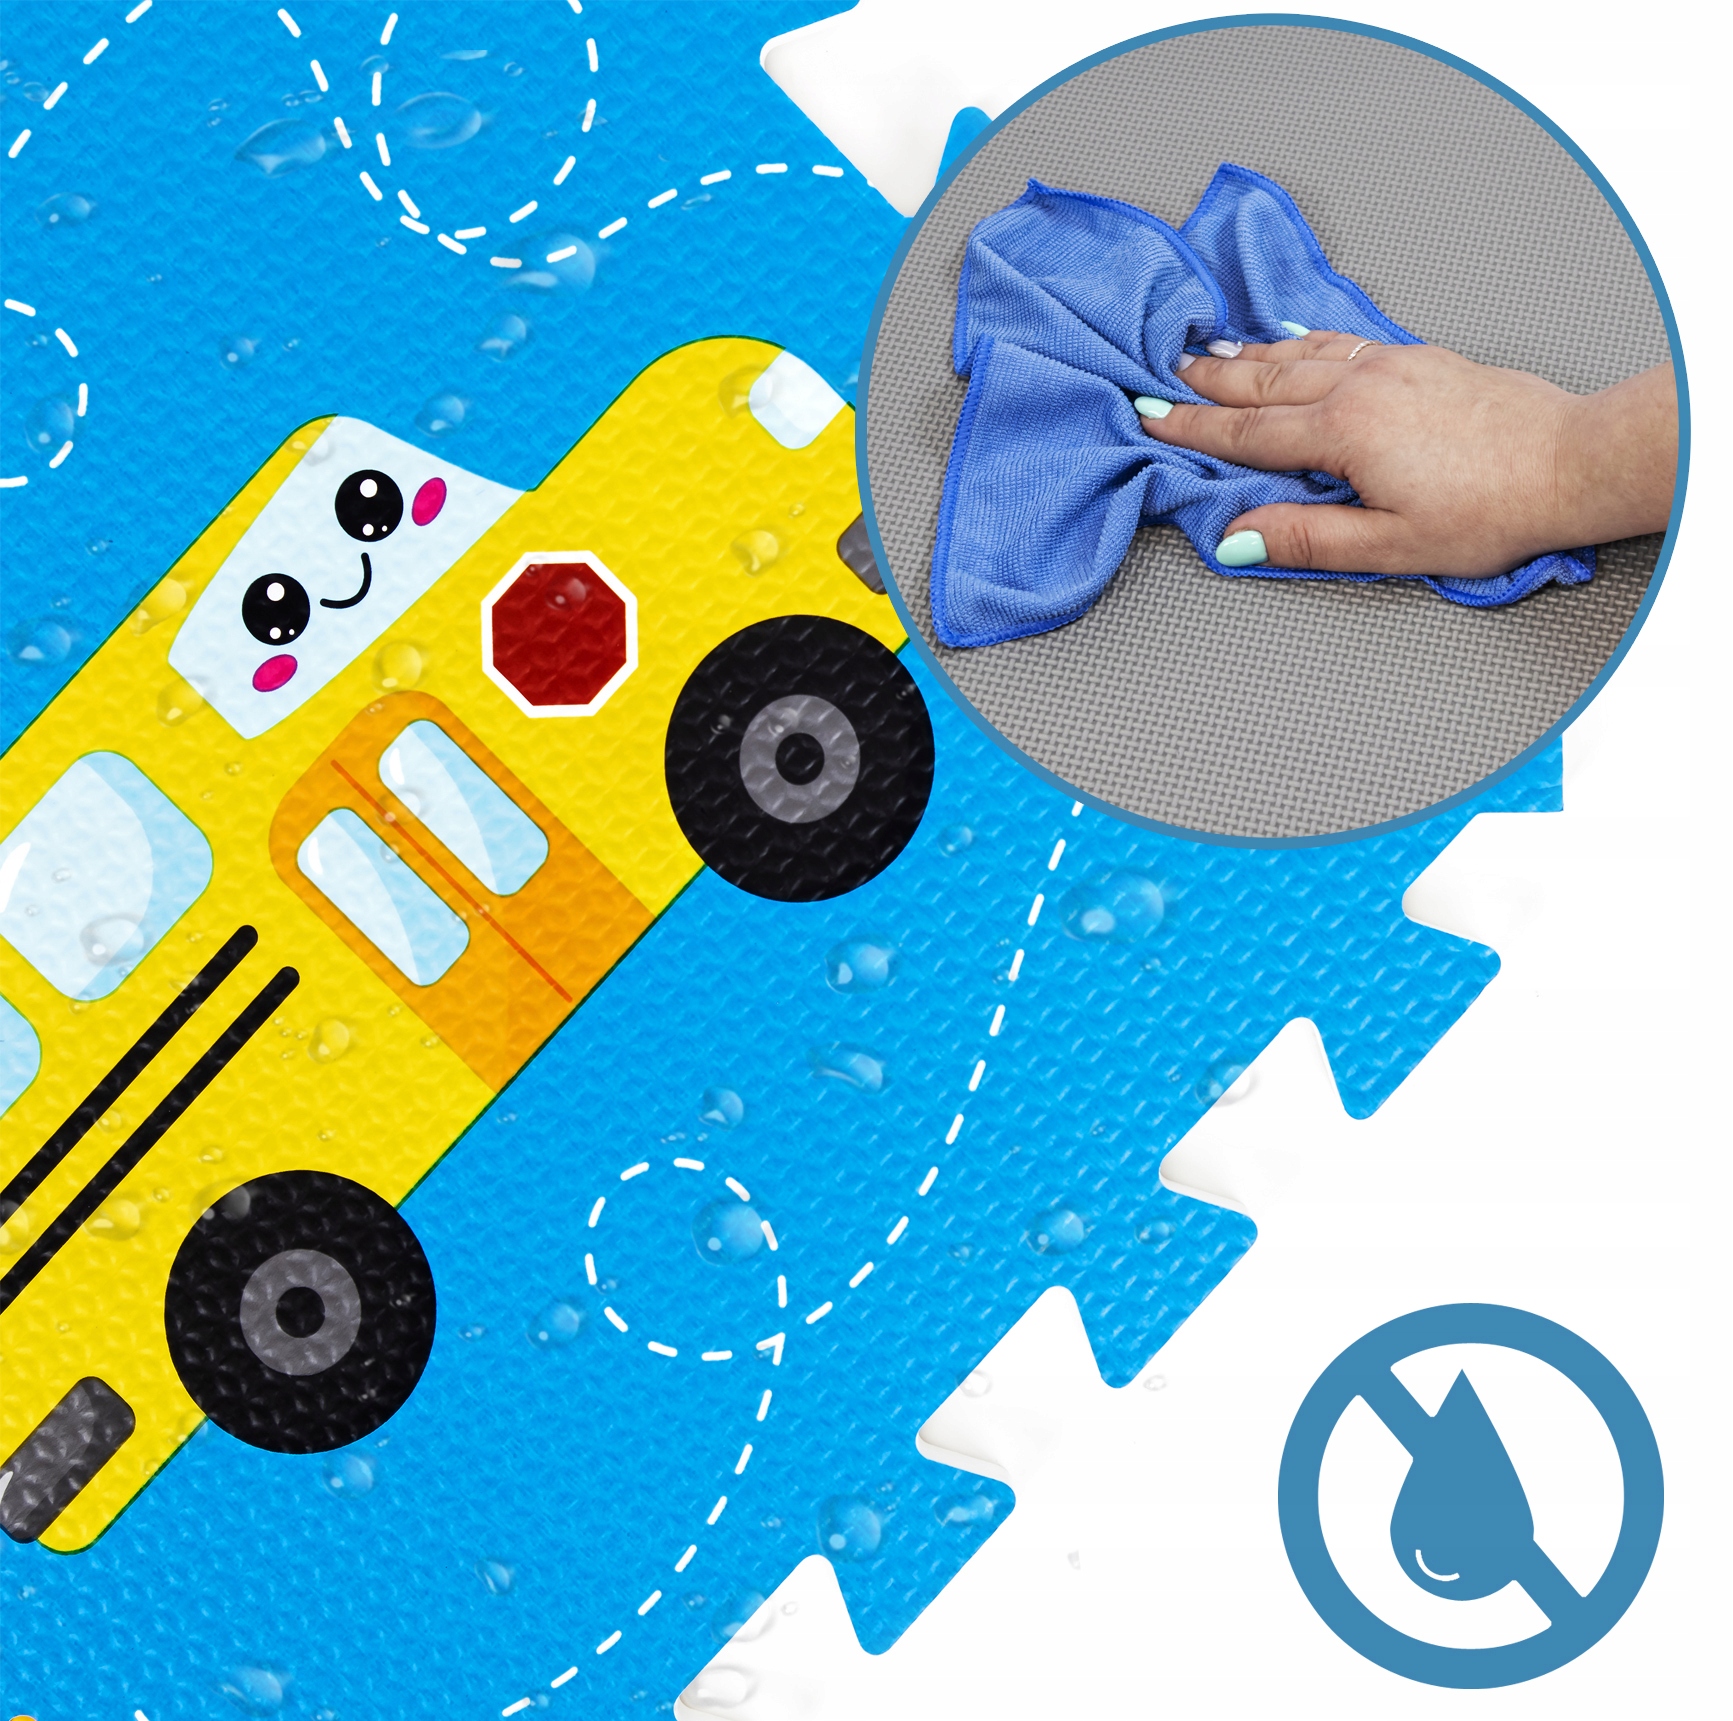 Podłogowa mata puzzle dla dzieci Sapphire Kids SK-85 - Vehicle